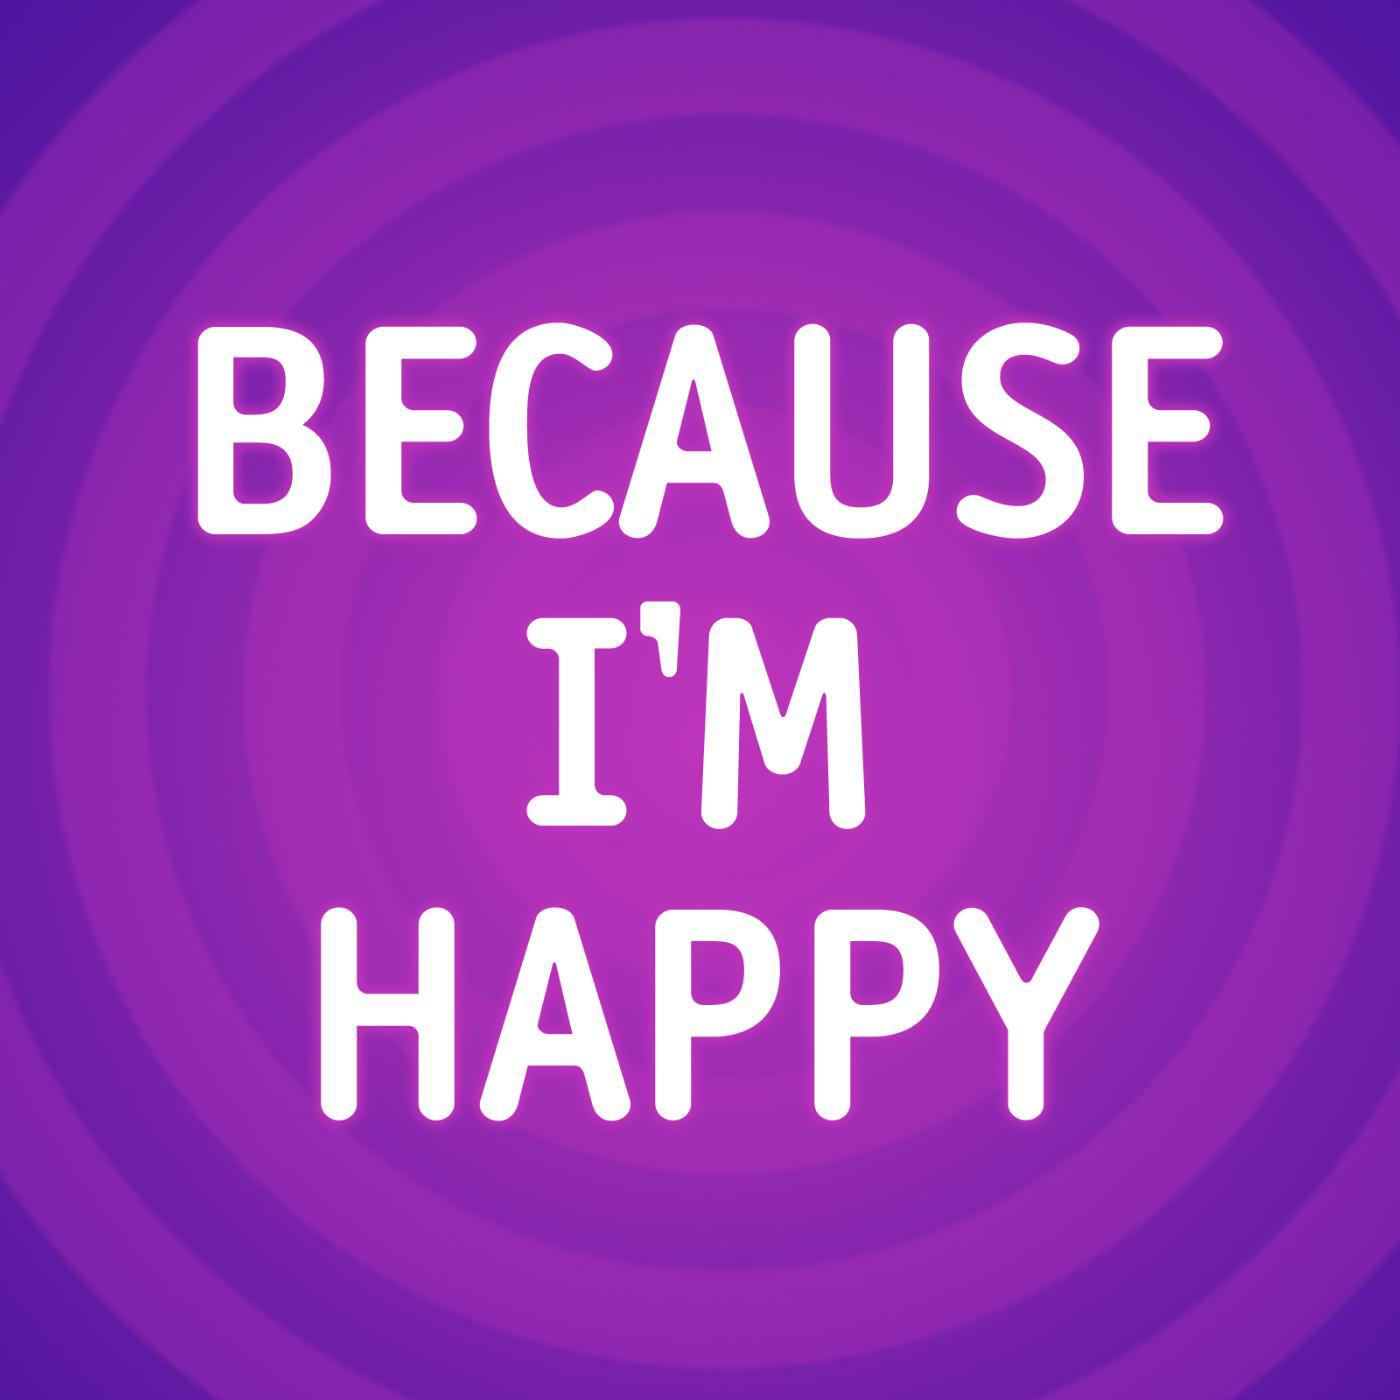 Im be happy. Because Happy. Because im Happy. Бикоз айм Хэппи.